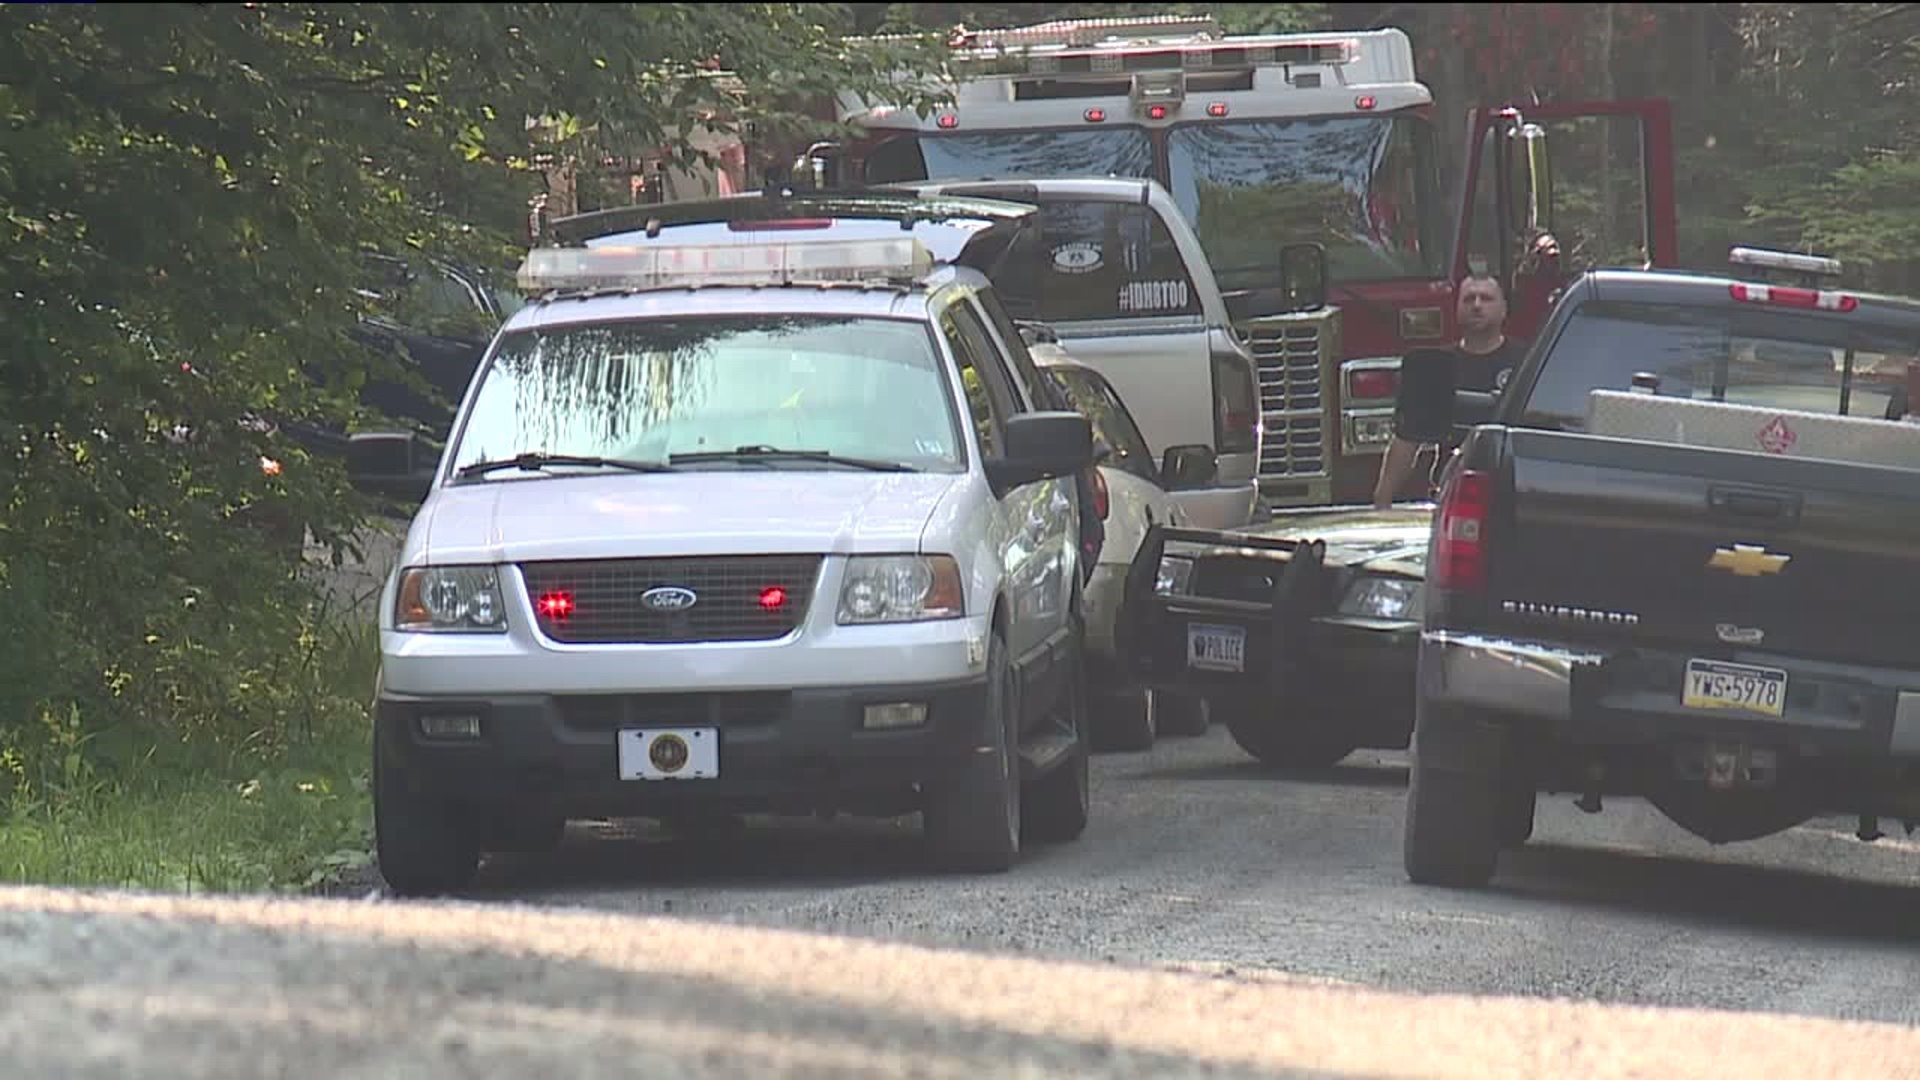 Coroner Called to ATV Crash in Wayne County